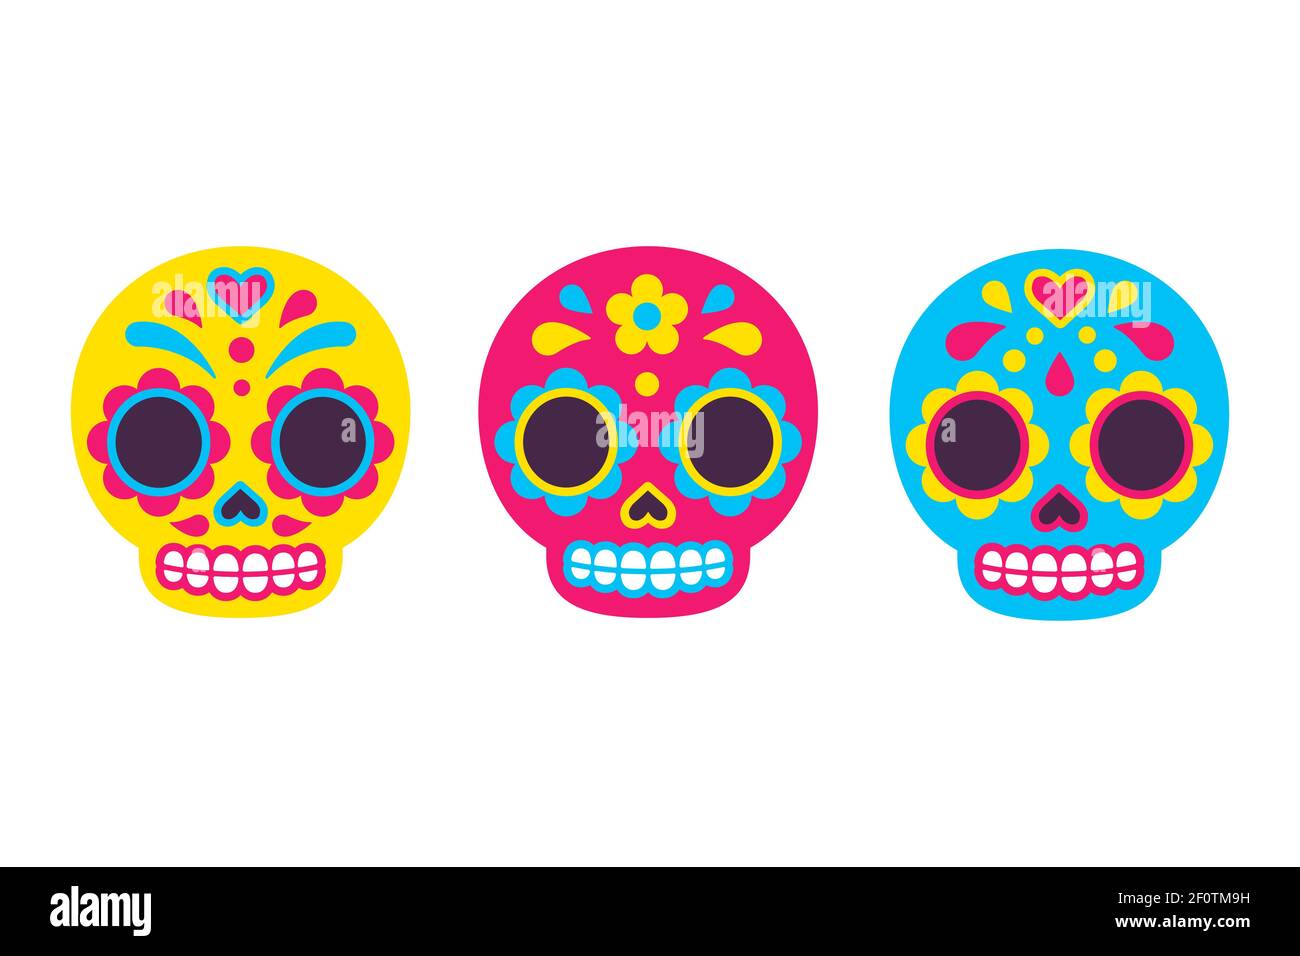 Mexikanische Dia de los Muertos (Tag der Toten) Zucker Schädel Symbole. Cute Cartoon Illustration Set in flachen Vektor-Stil. Stock Vektor